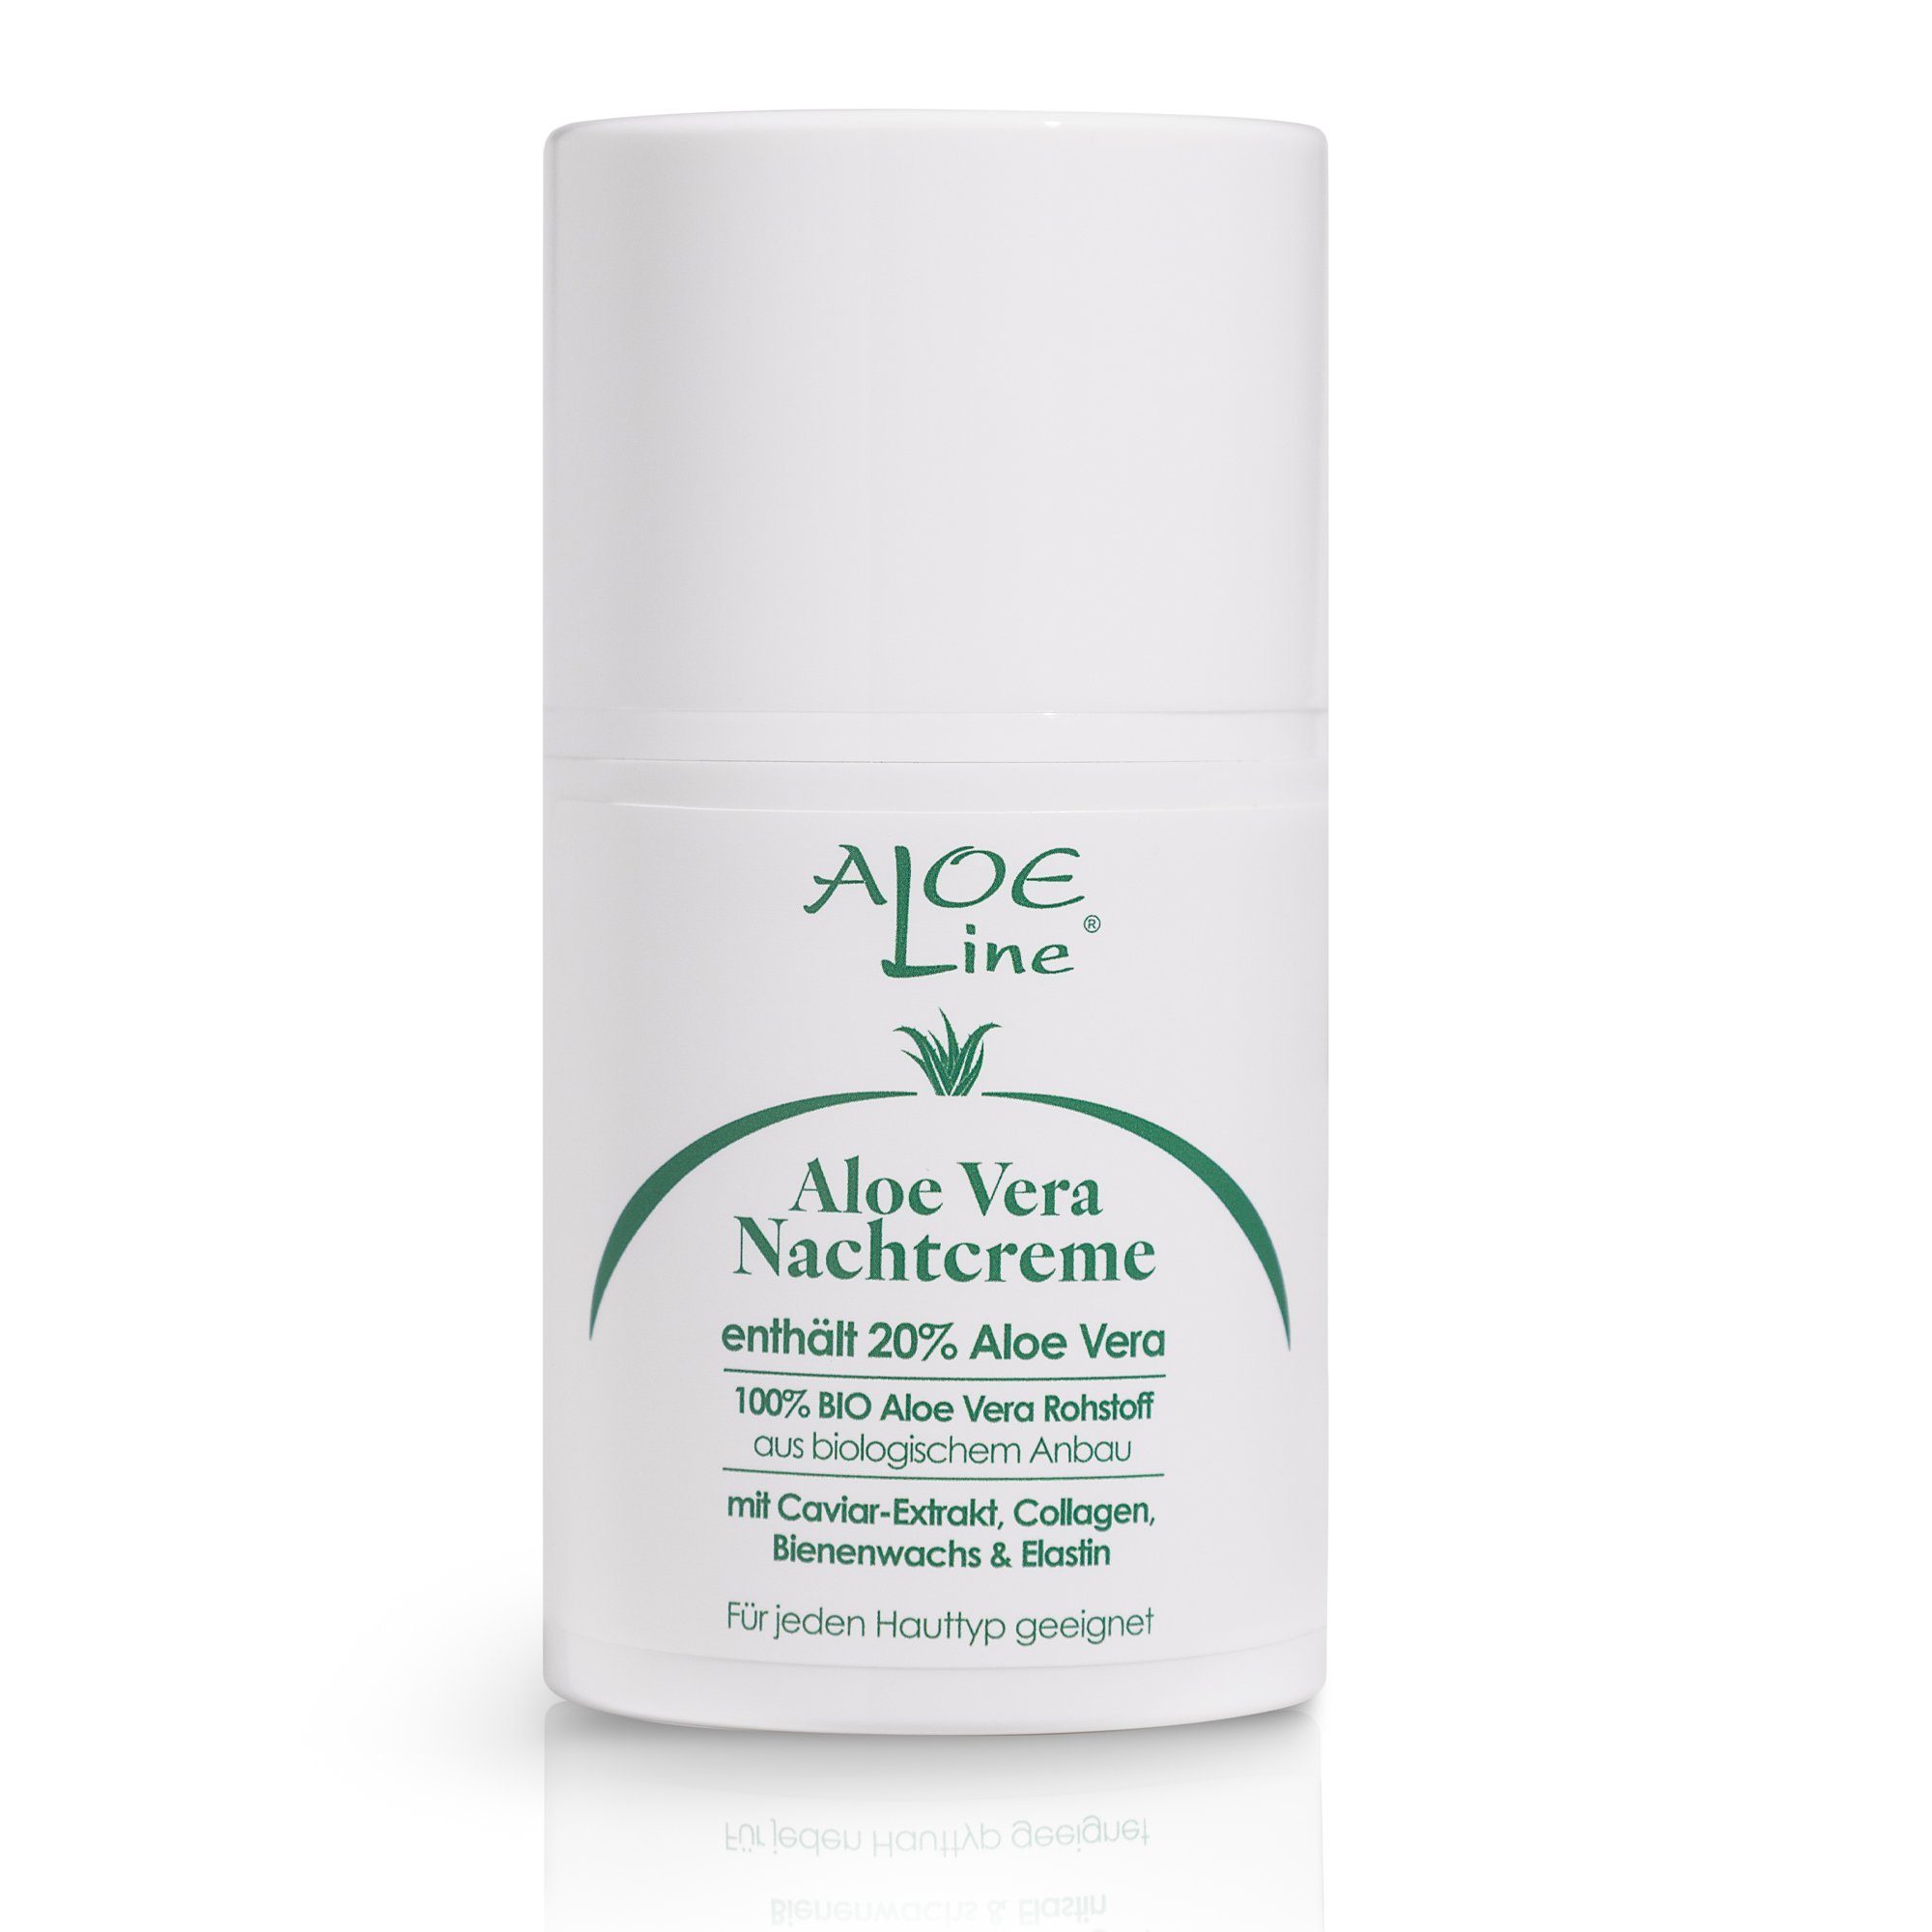 ALOE Line Nachtcreme Aloe Vera Nachtcreme mit 20% Bio Aloe Vera & Caviar-Extrakt, 50ml Airless Dispenser | Nachtcremes